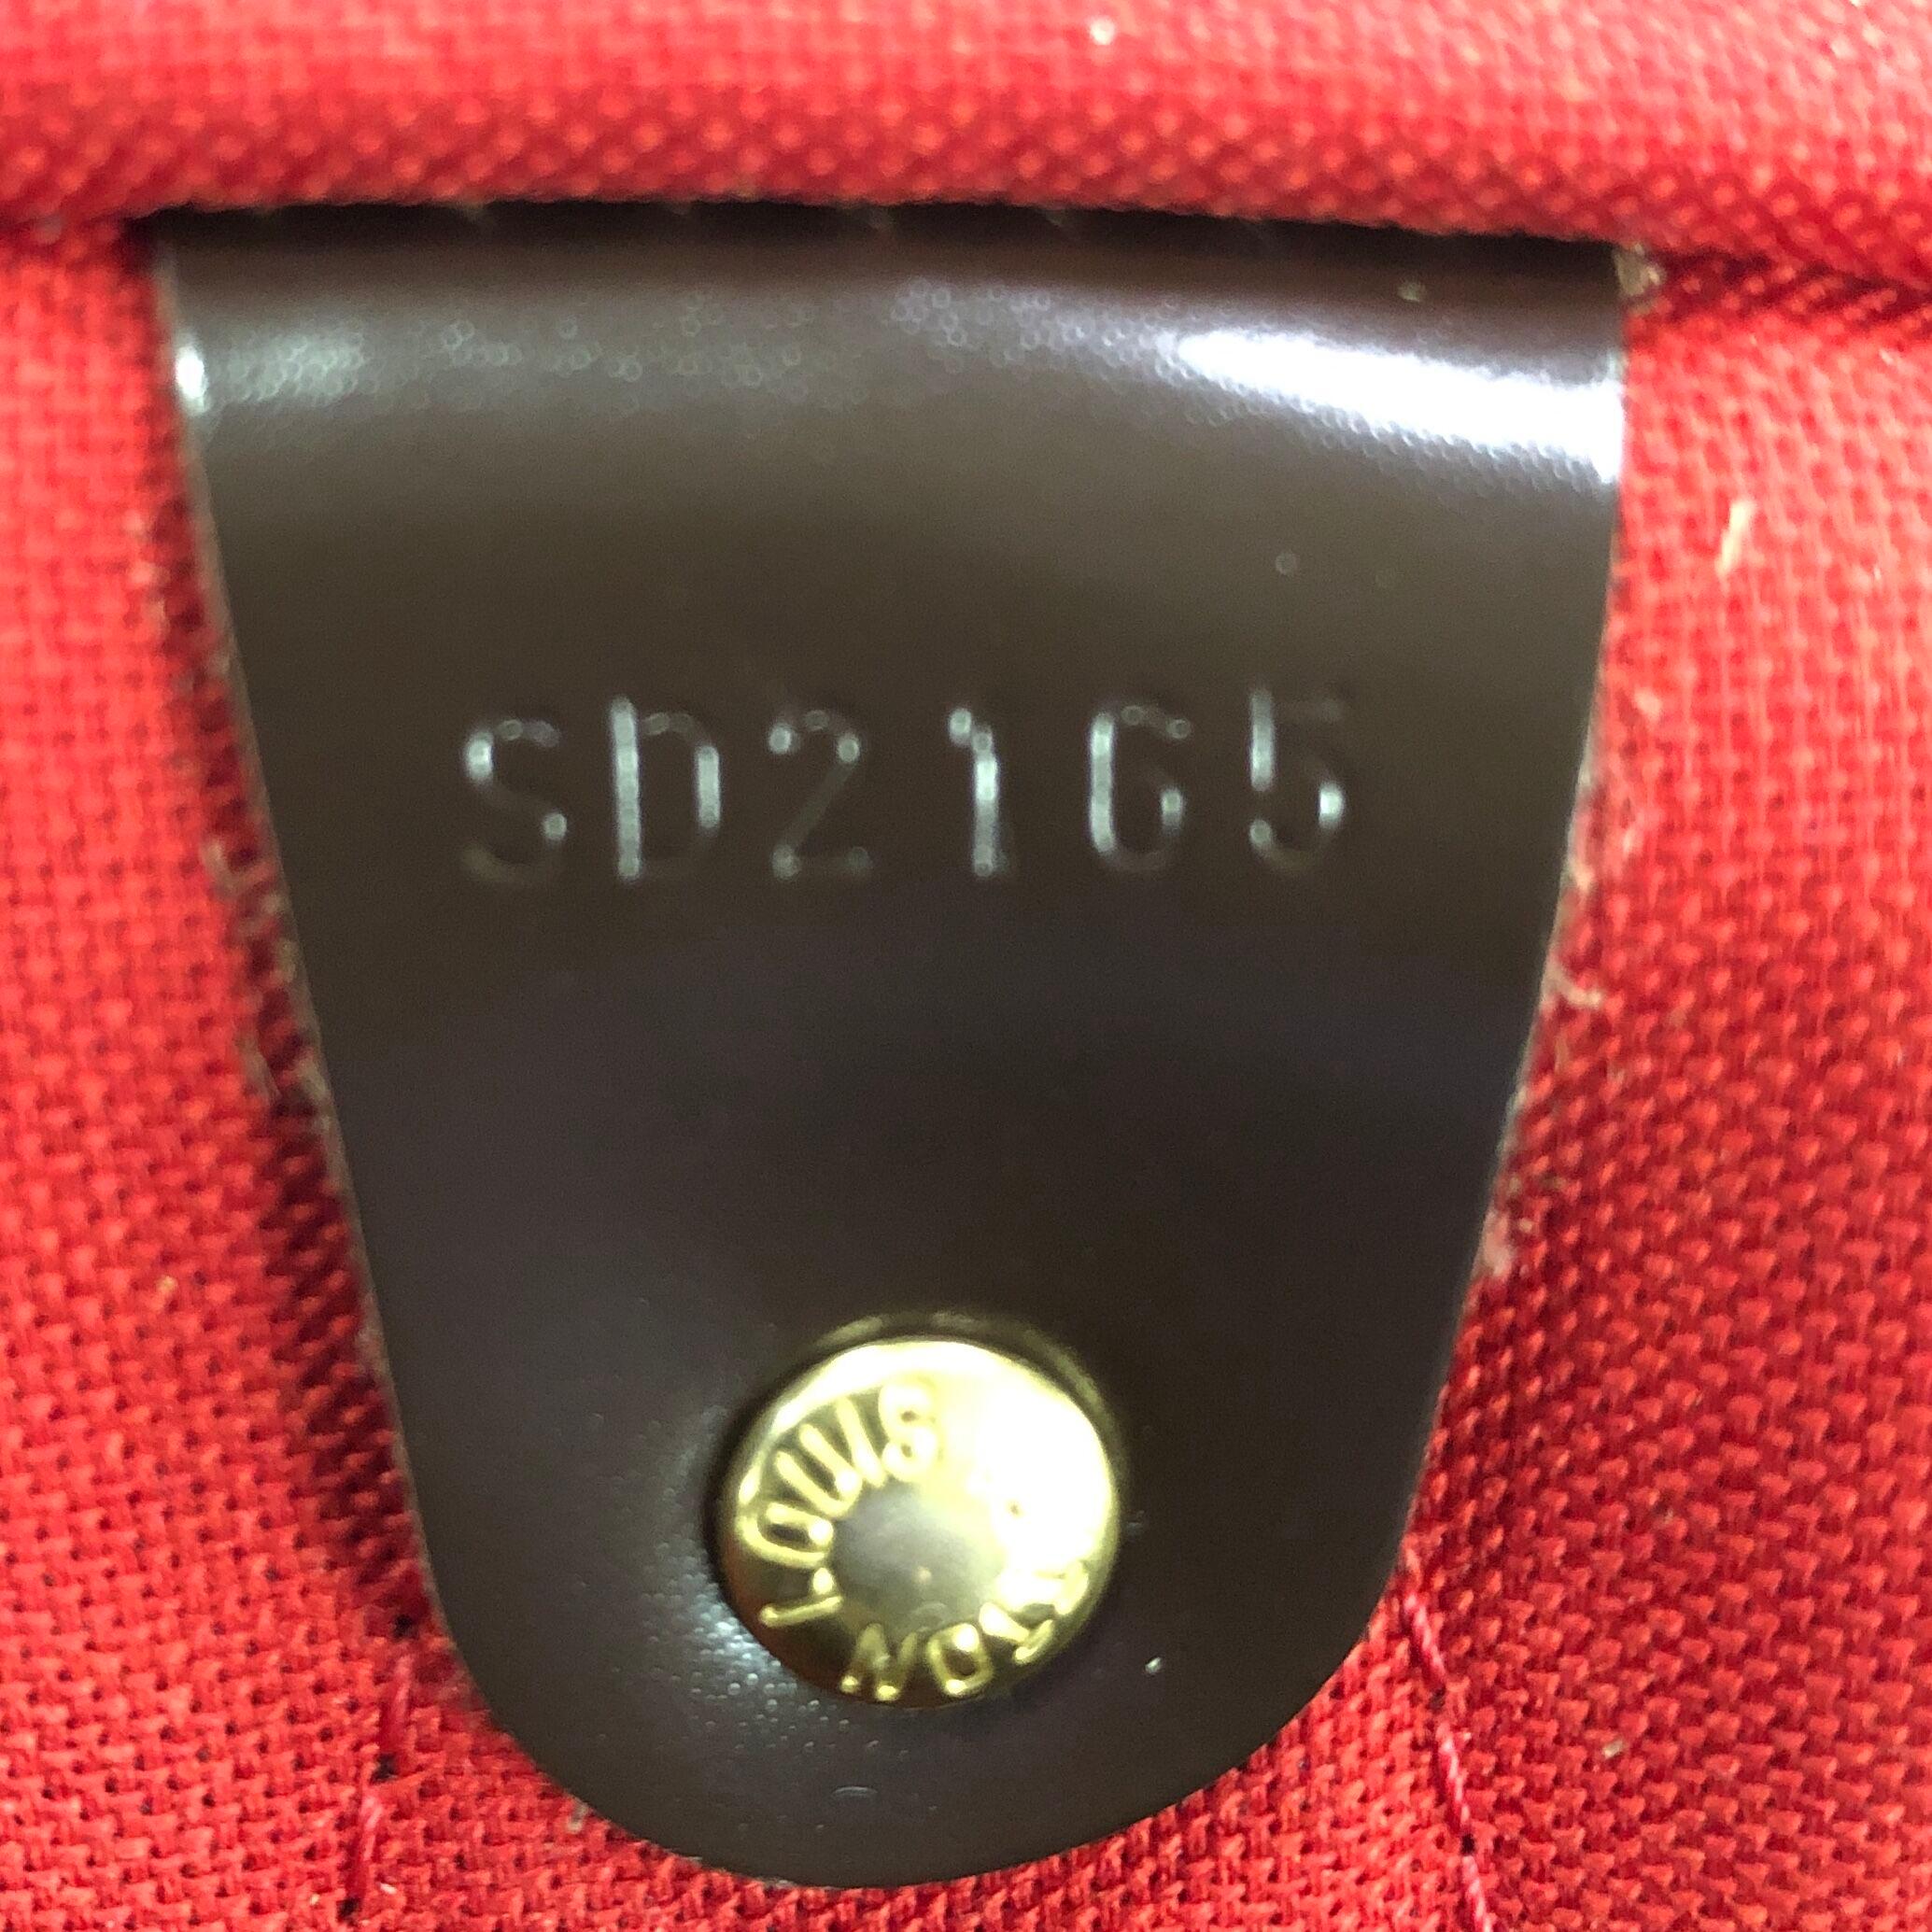 Louis Vuitton Speedy Handbag Damier 35 4